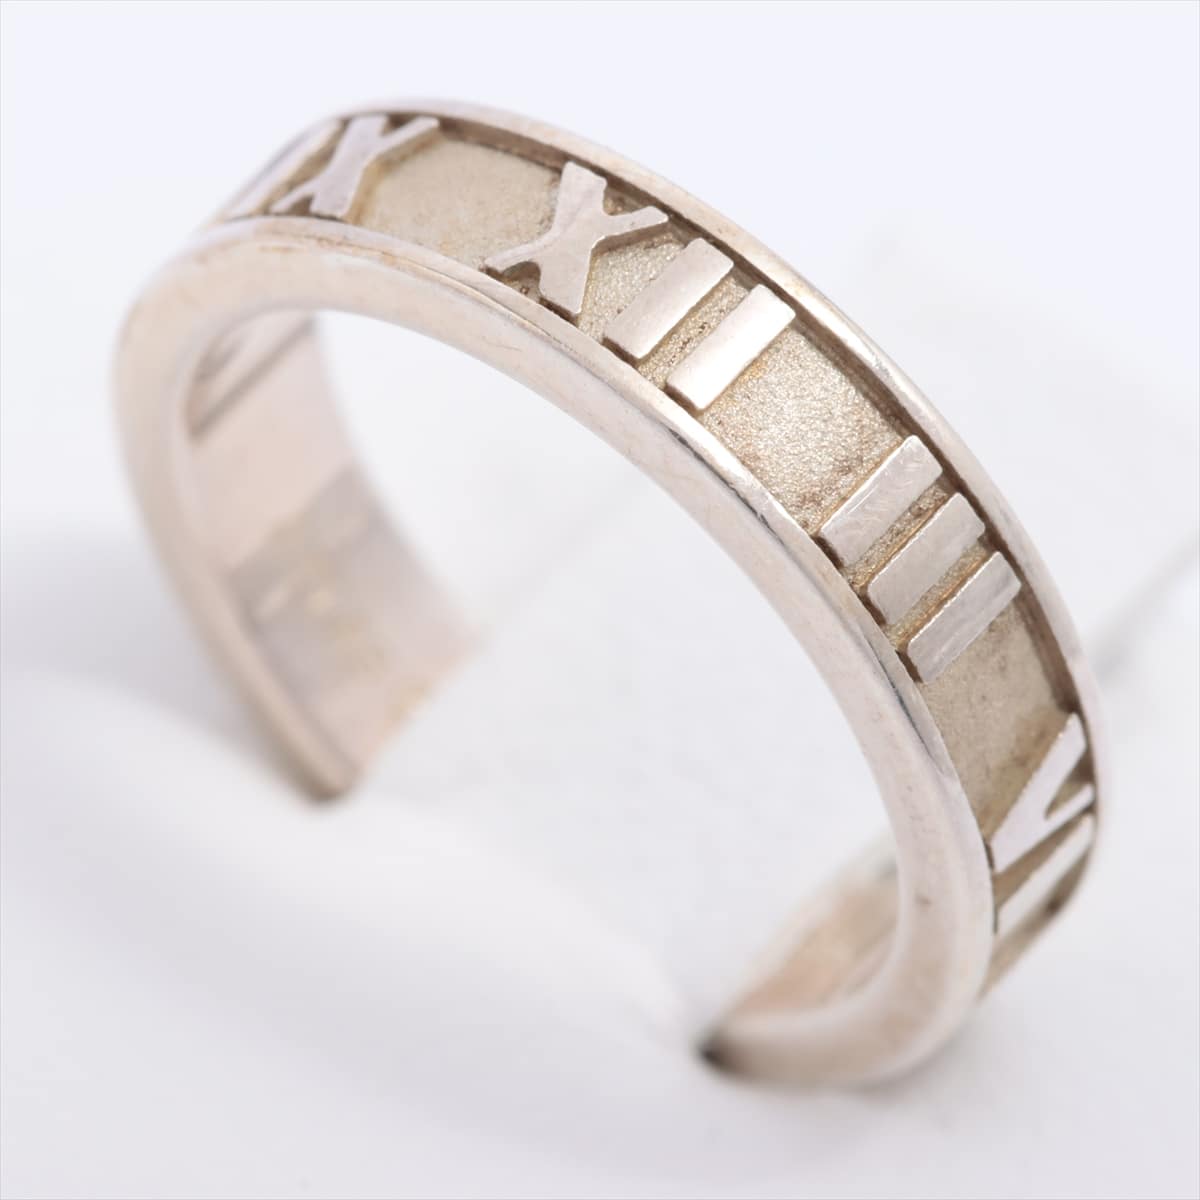 Tiffany Atlas rings 925 2.8g Silver